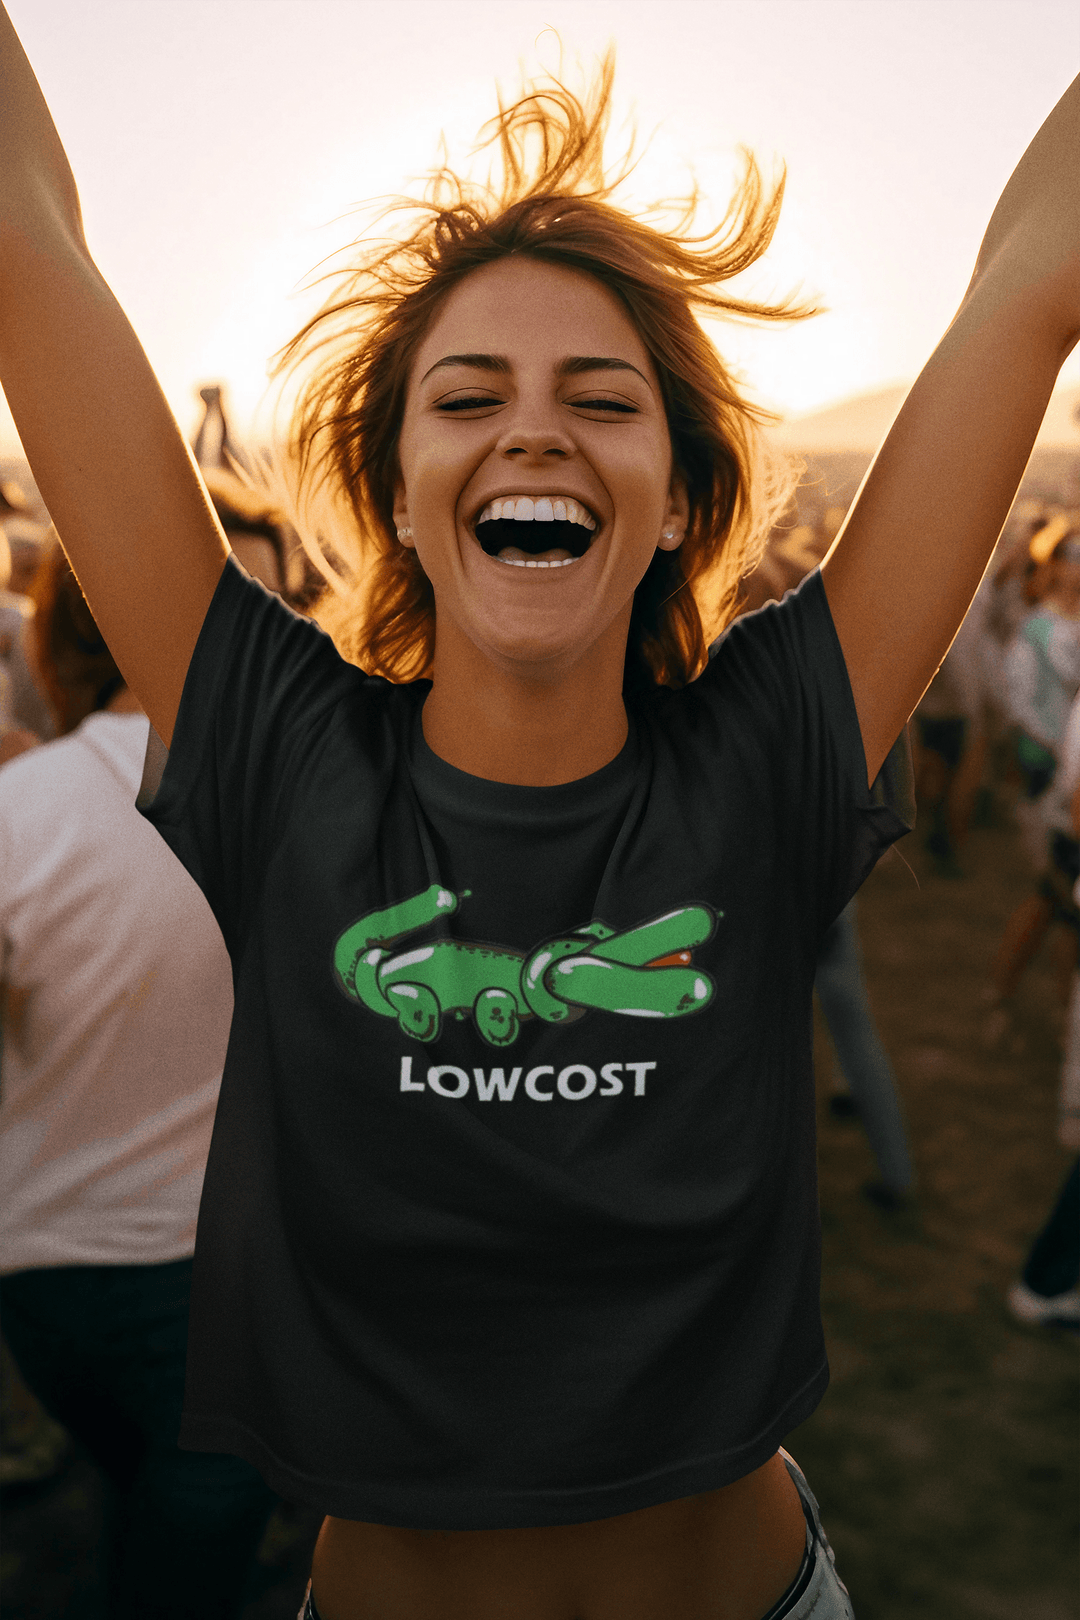 LowCost Alligator T-shirt Short Sleeve Ultra Soft Cotton Crewneck Unisex Top - TopKoalaTee